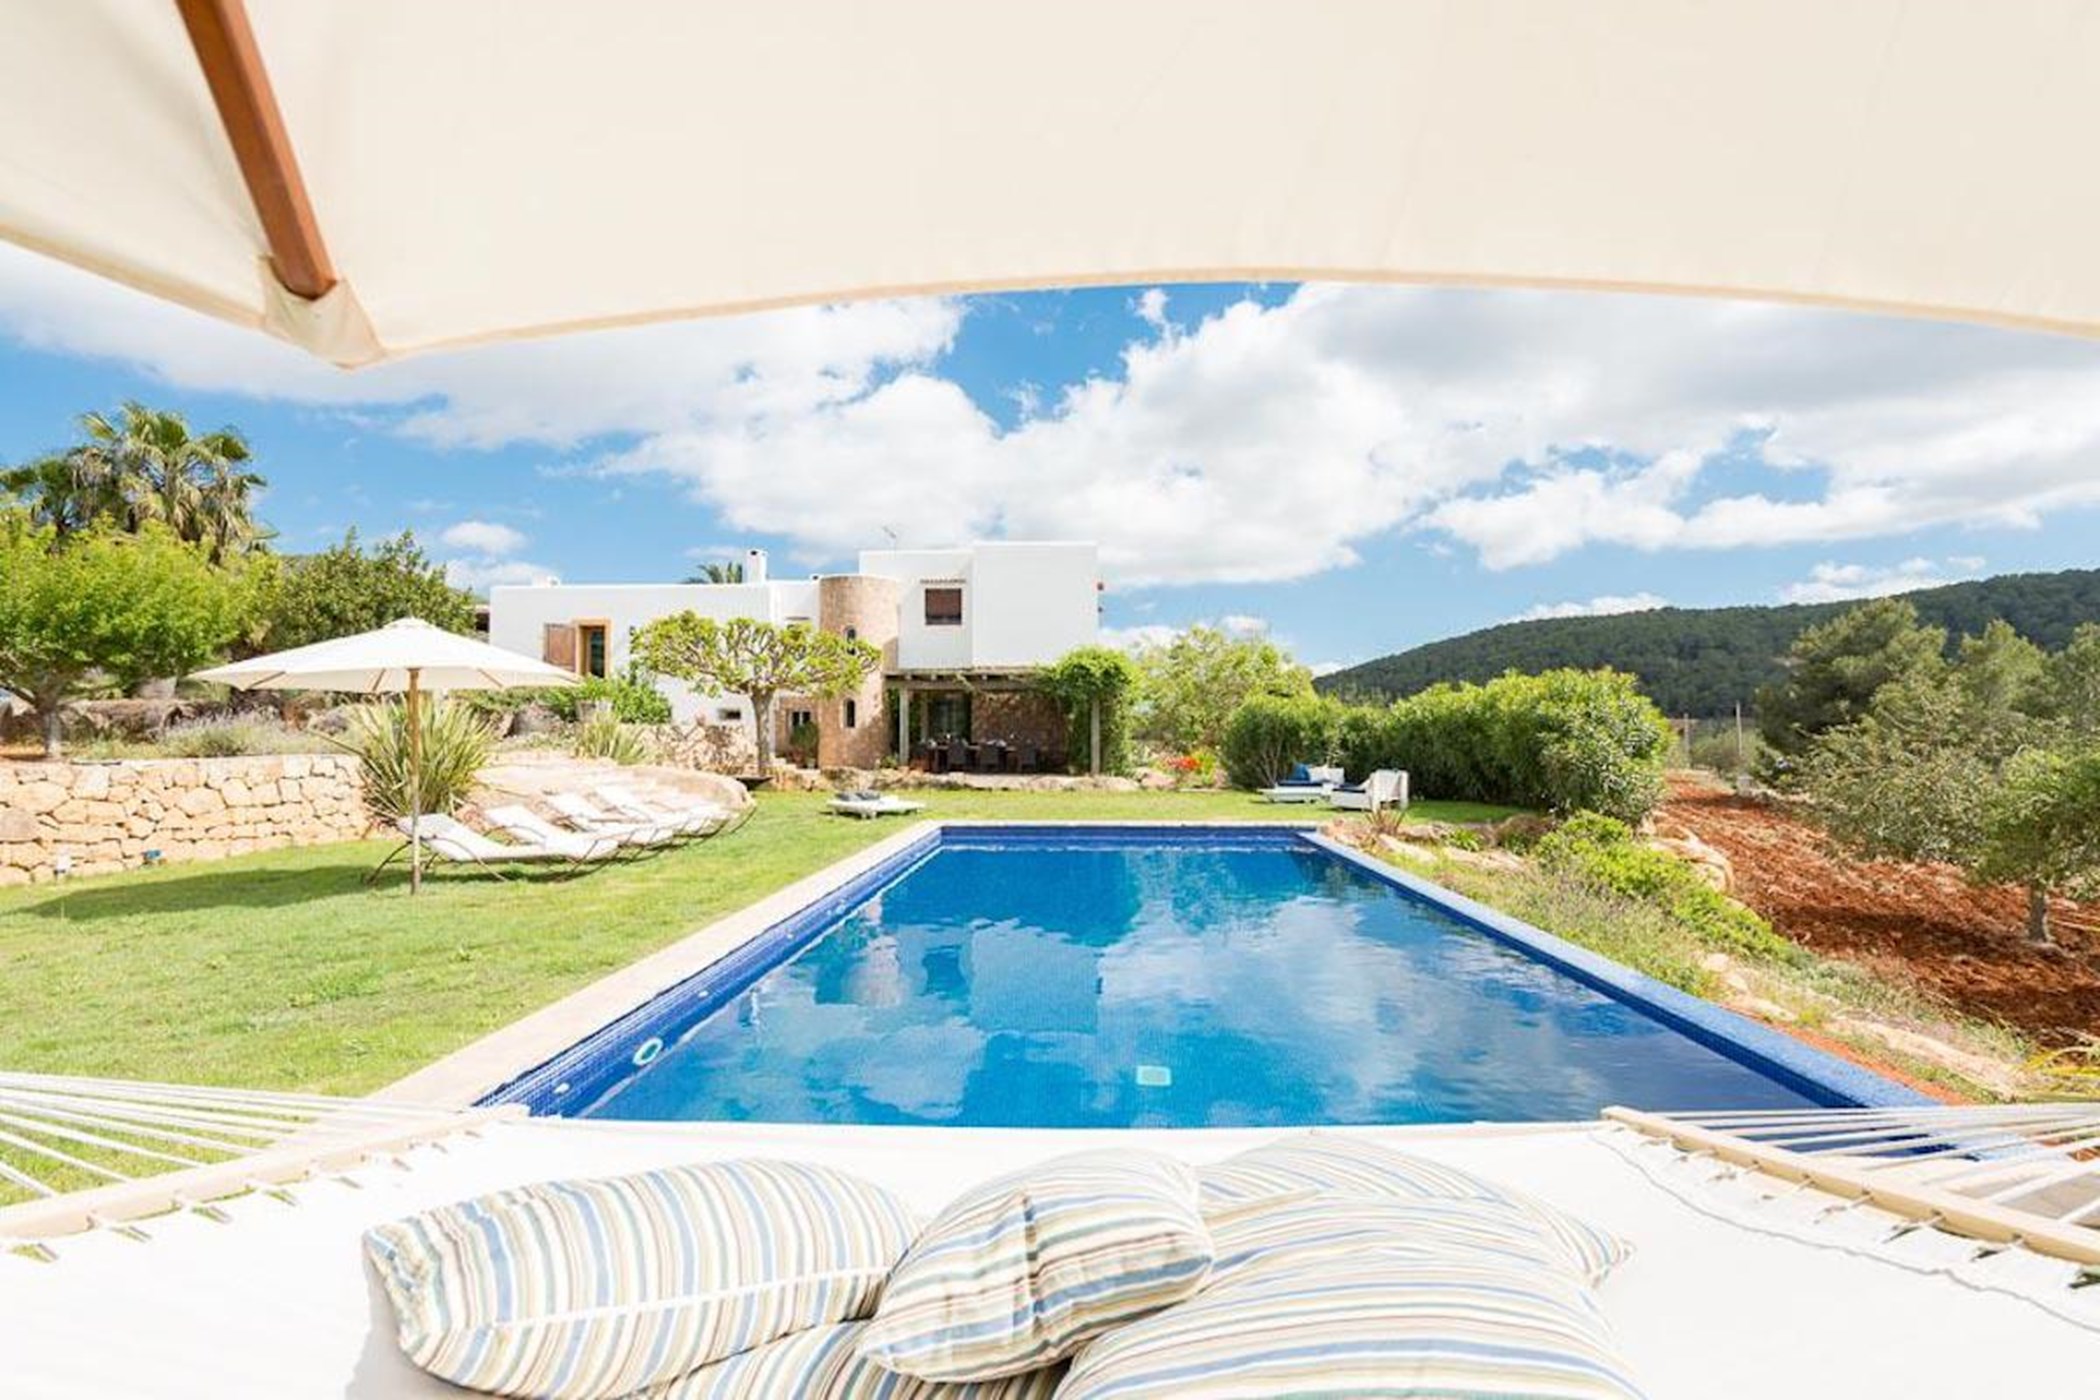 Can Kai, your perfect holiday villa in Ibiza.